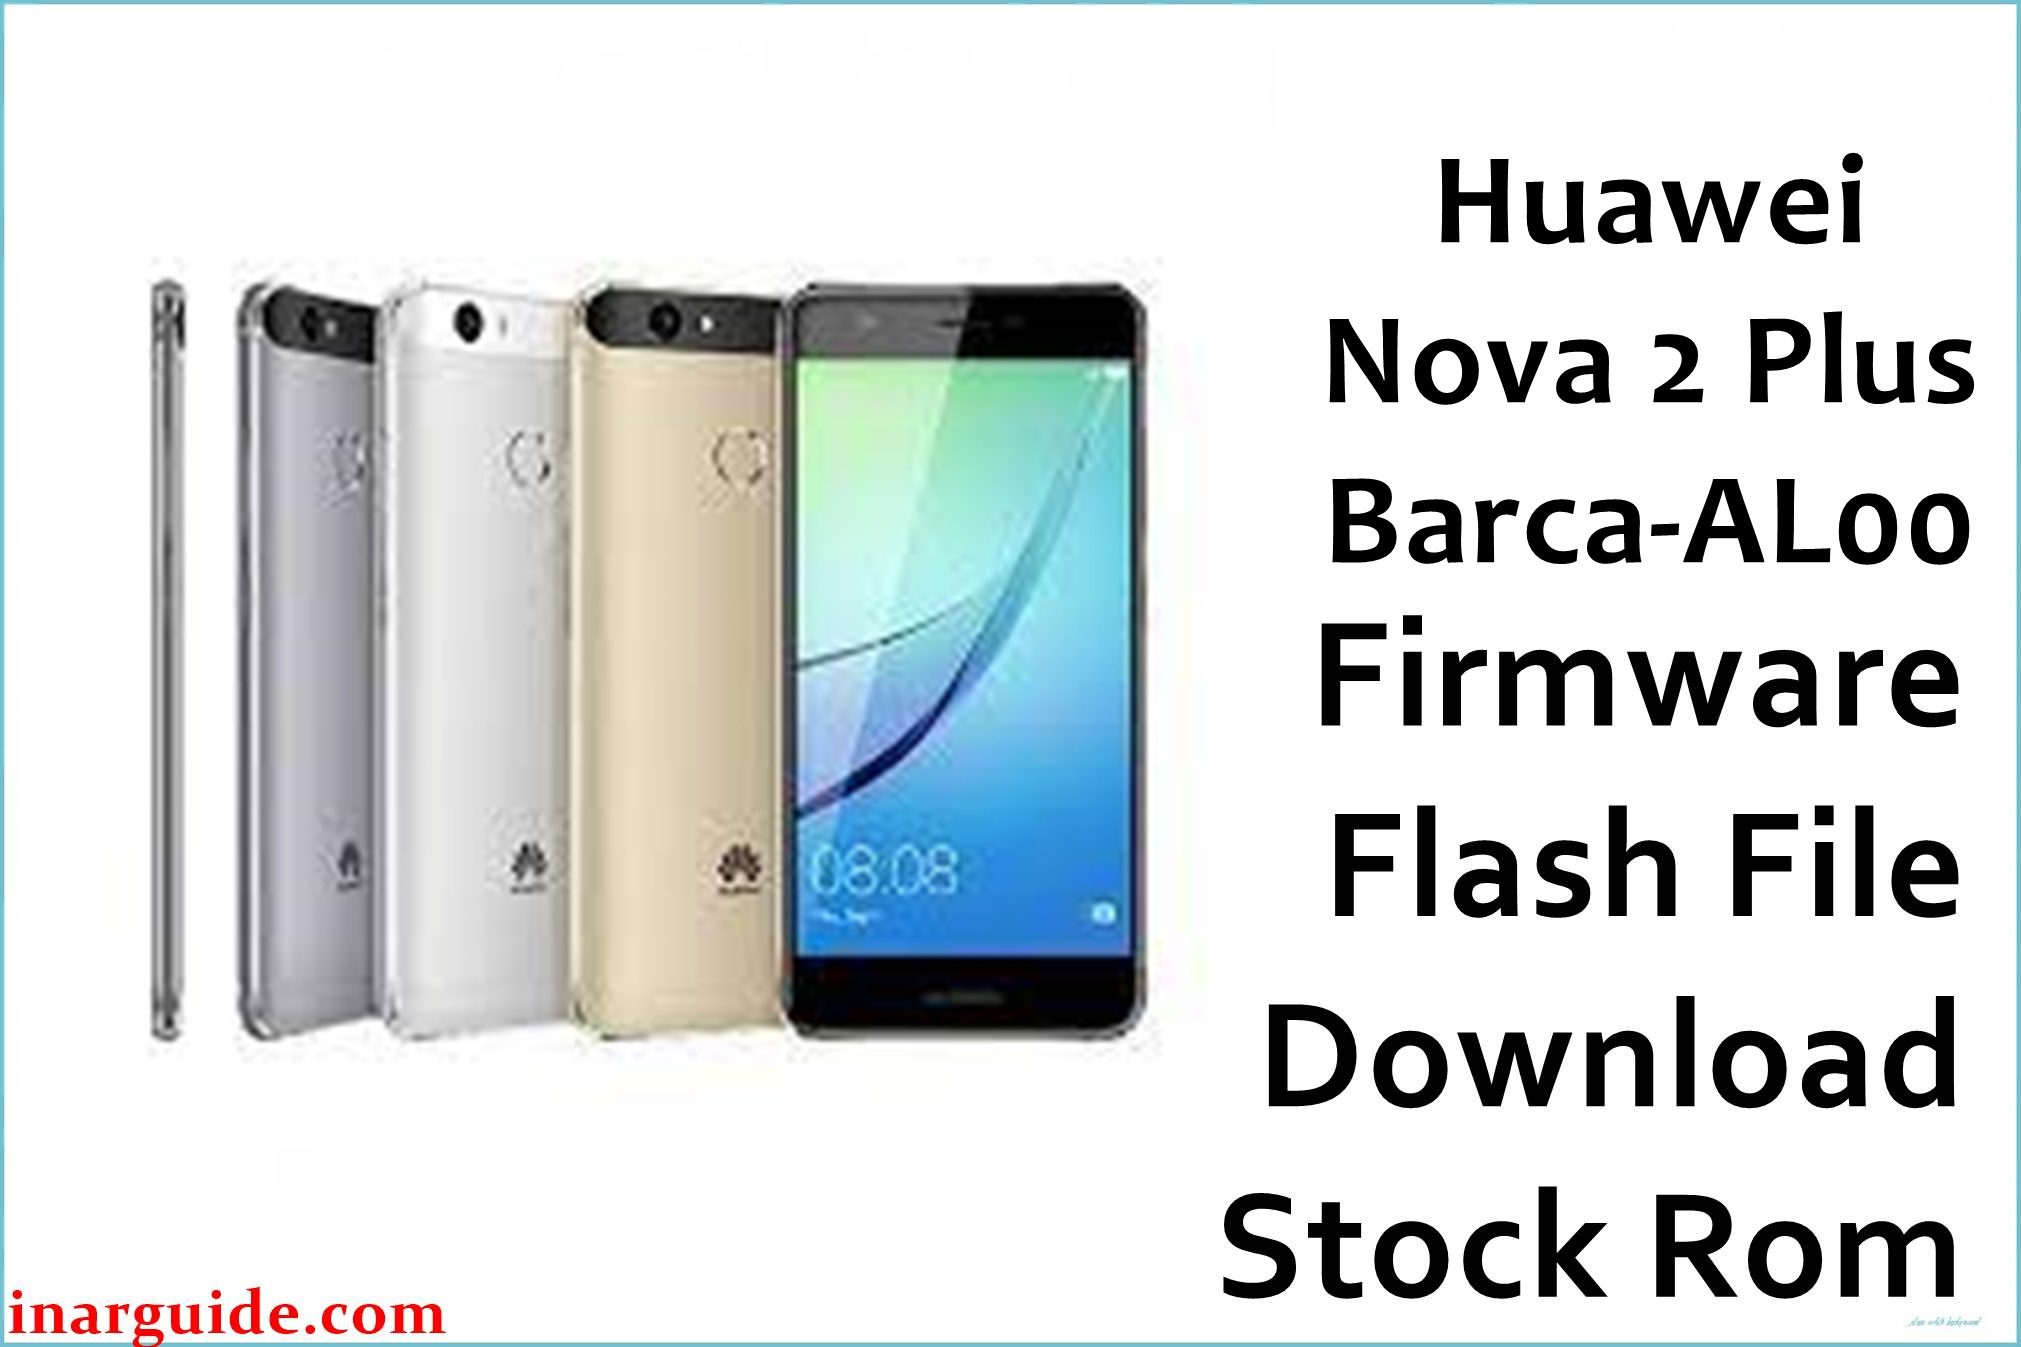 Huawei Nova 2 Plus Barca AL00